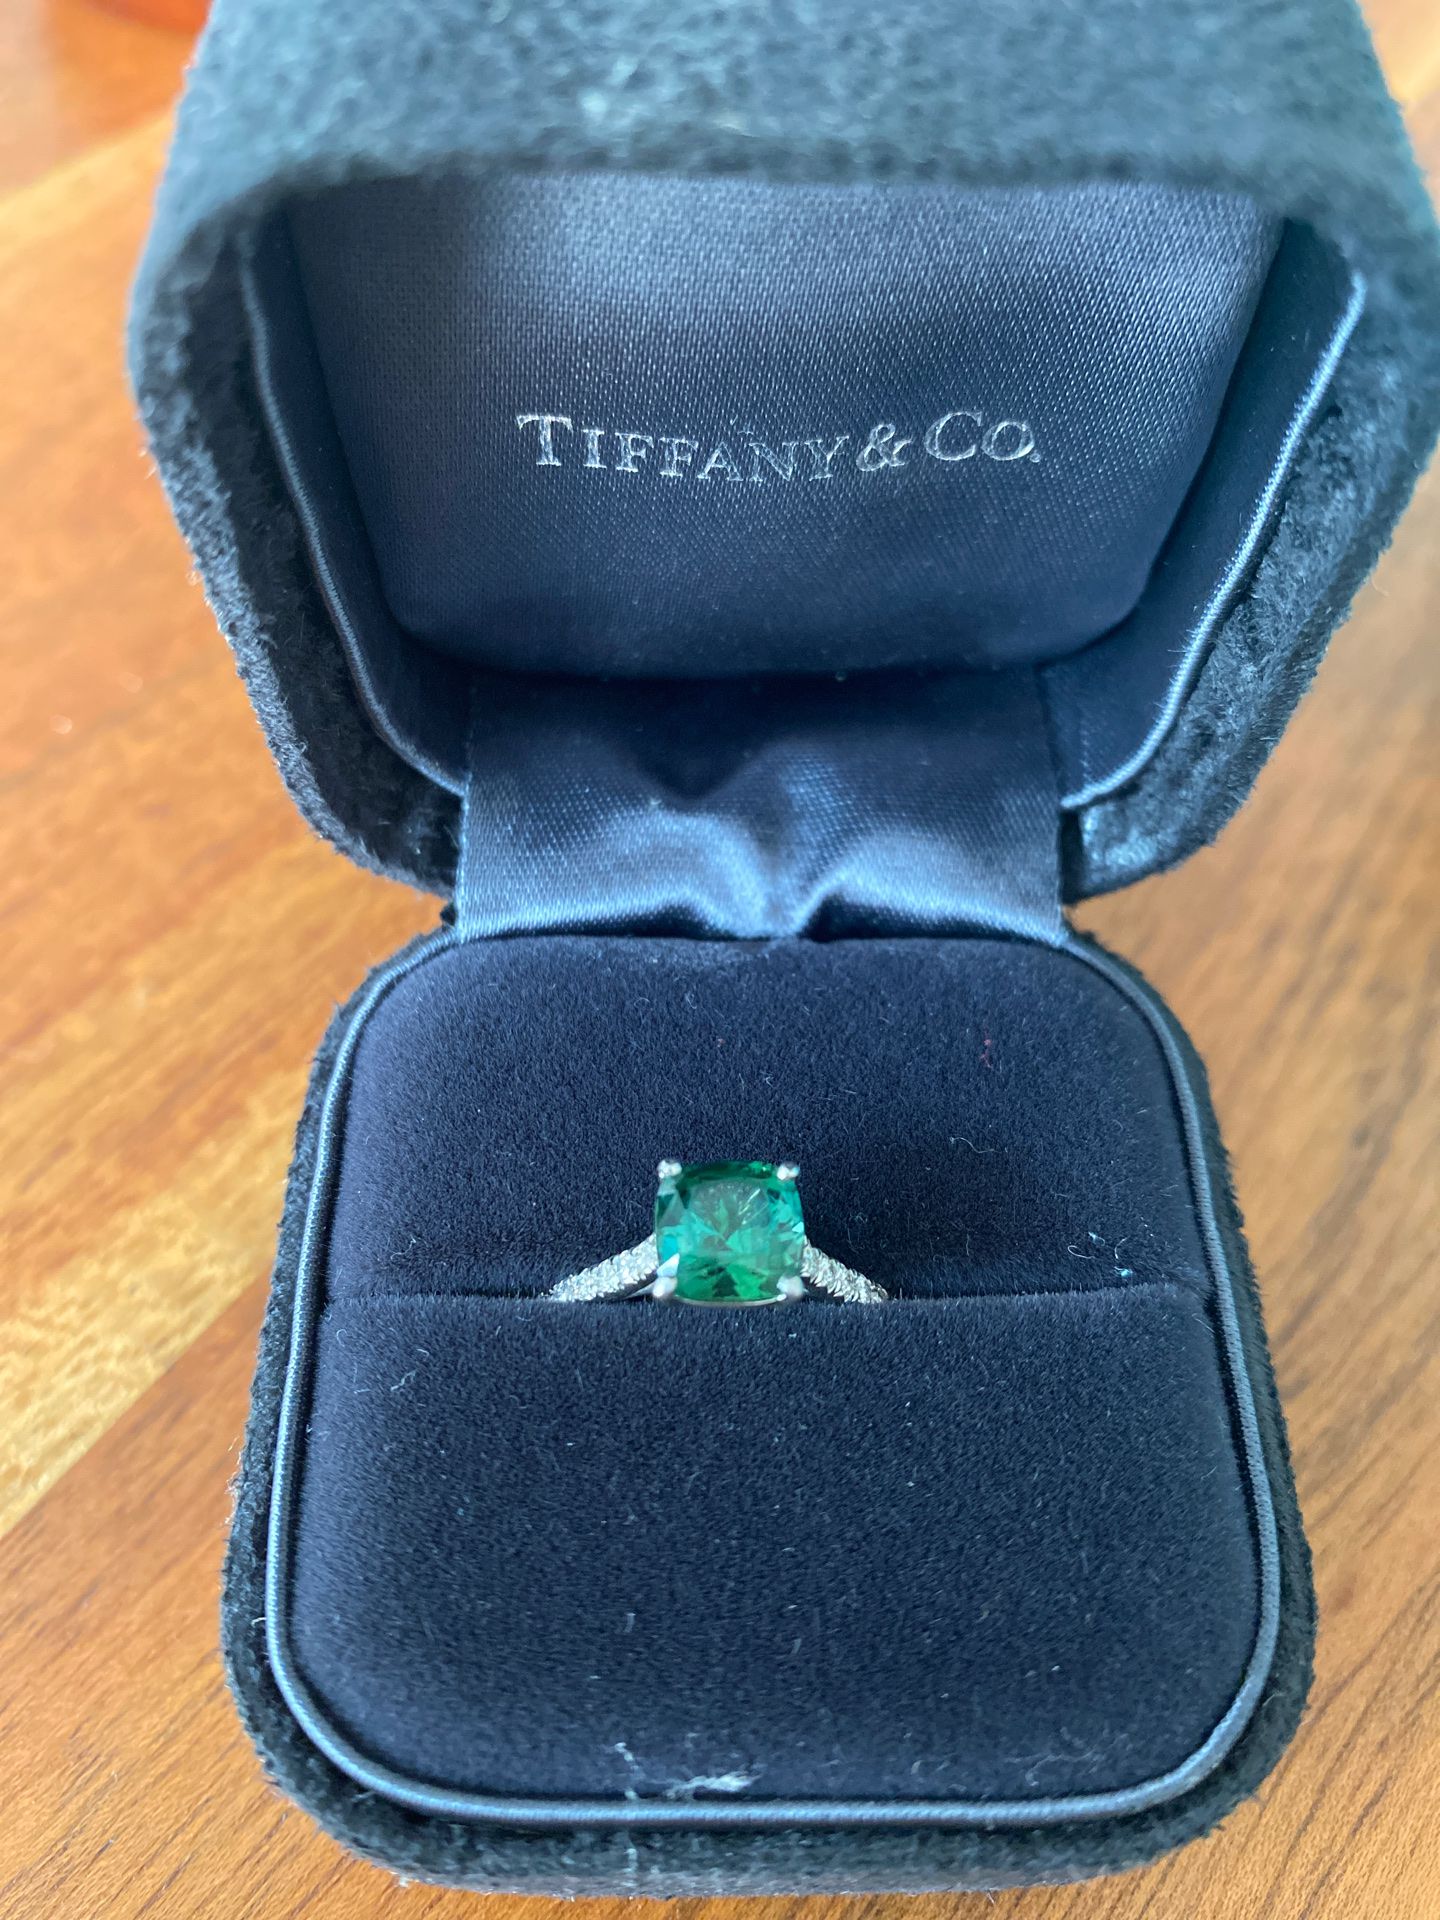 Tiffany’s Legacy Tourmaline Ring